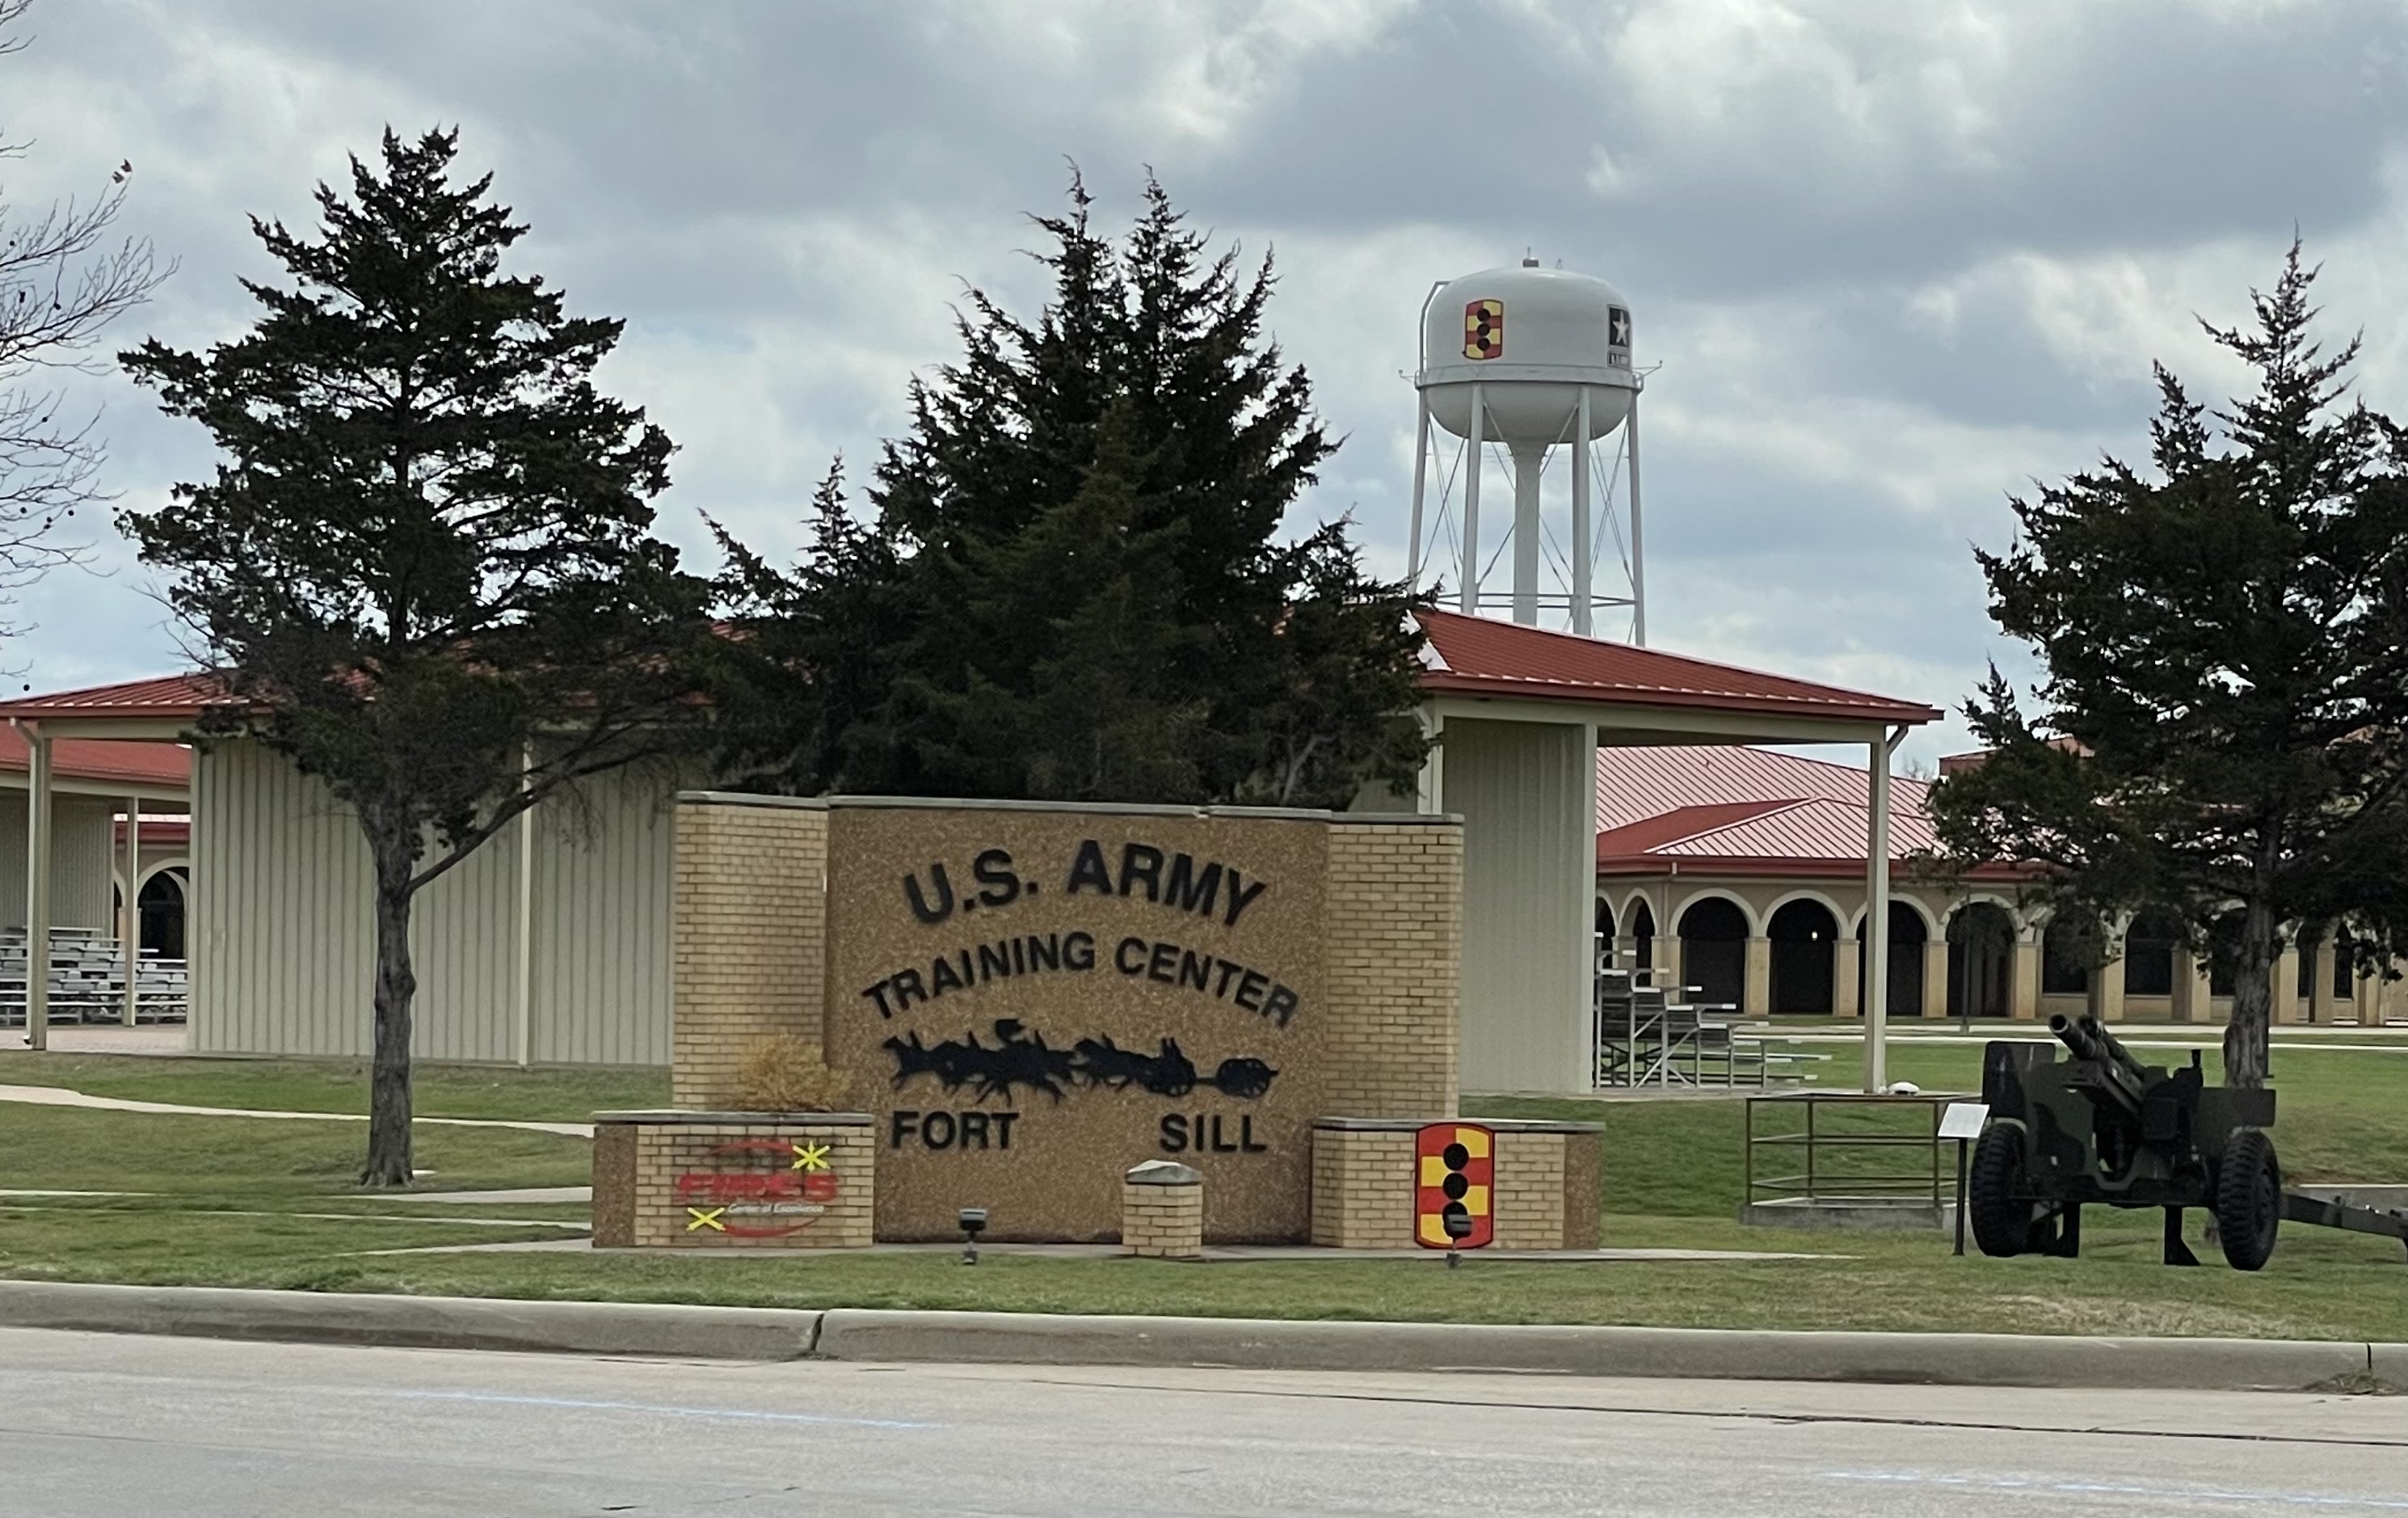 Der Eingang des Trainingszentrums des US-Militärs in Fort Sill